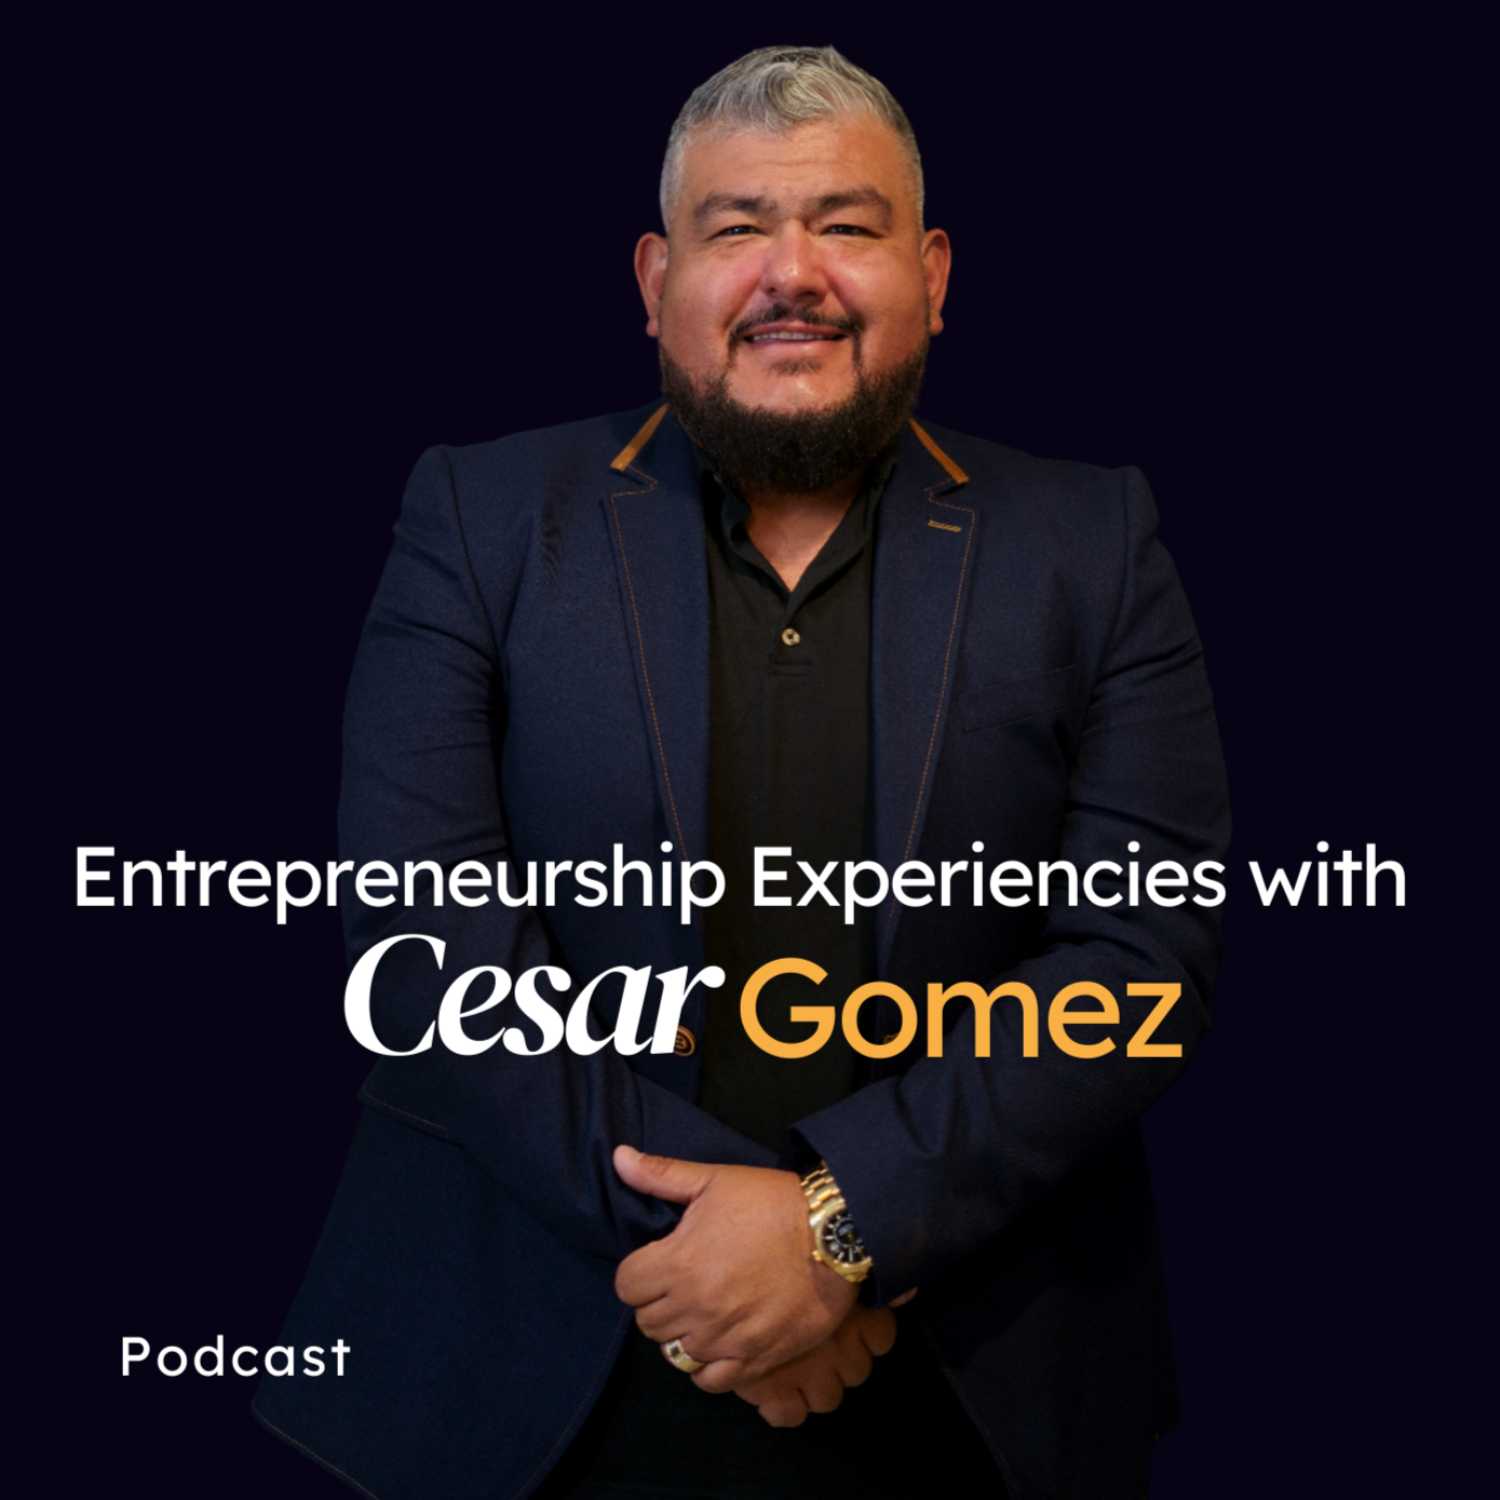 Entrepreneurship Experience with Cesar Gomez